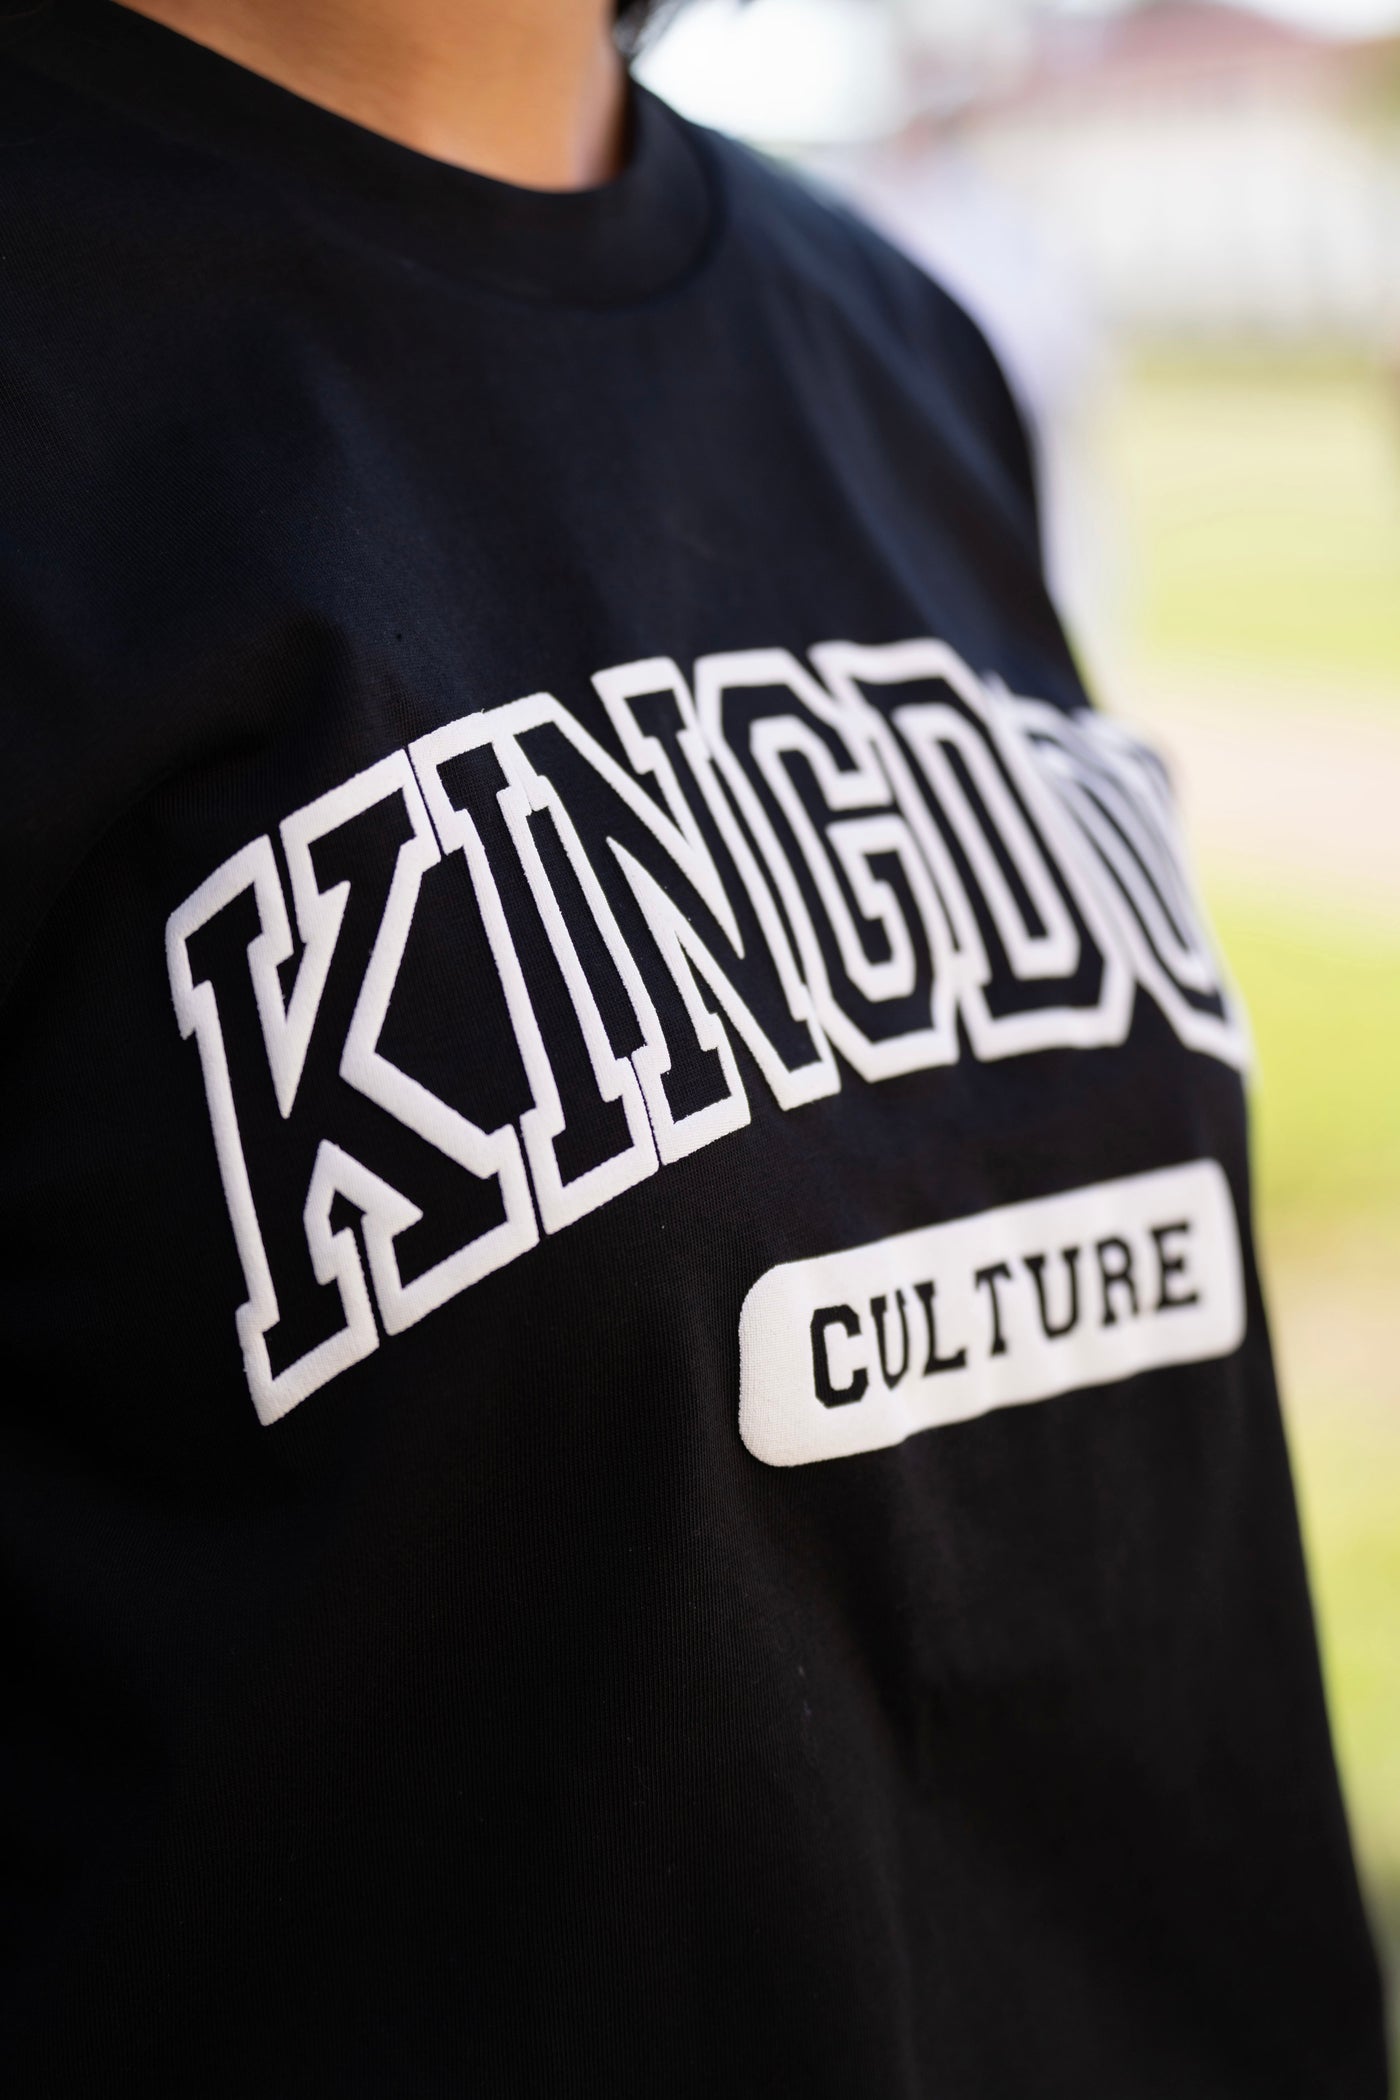 Kingdom Culture Collegiate Tee - Black